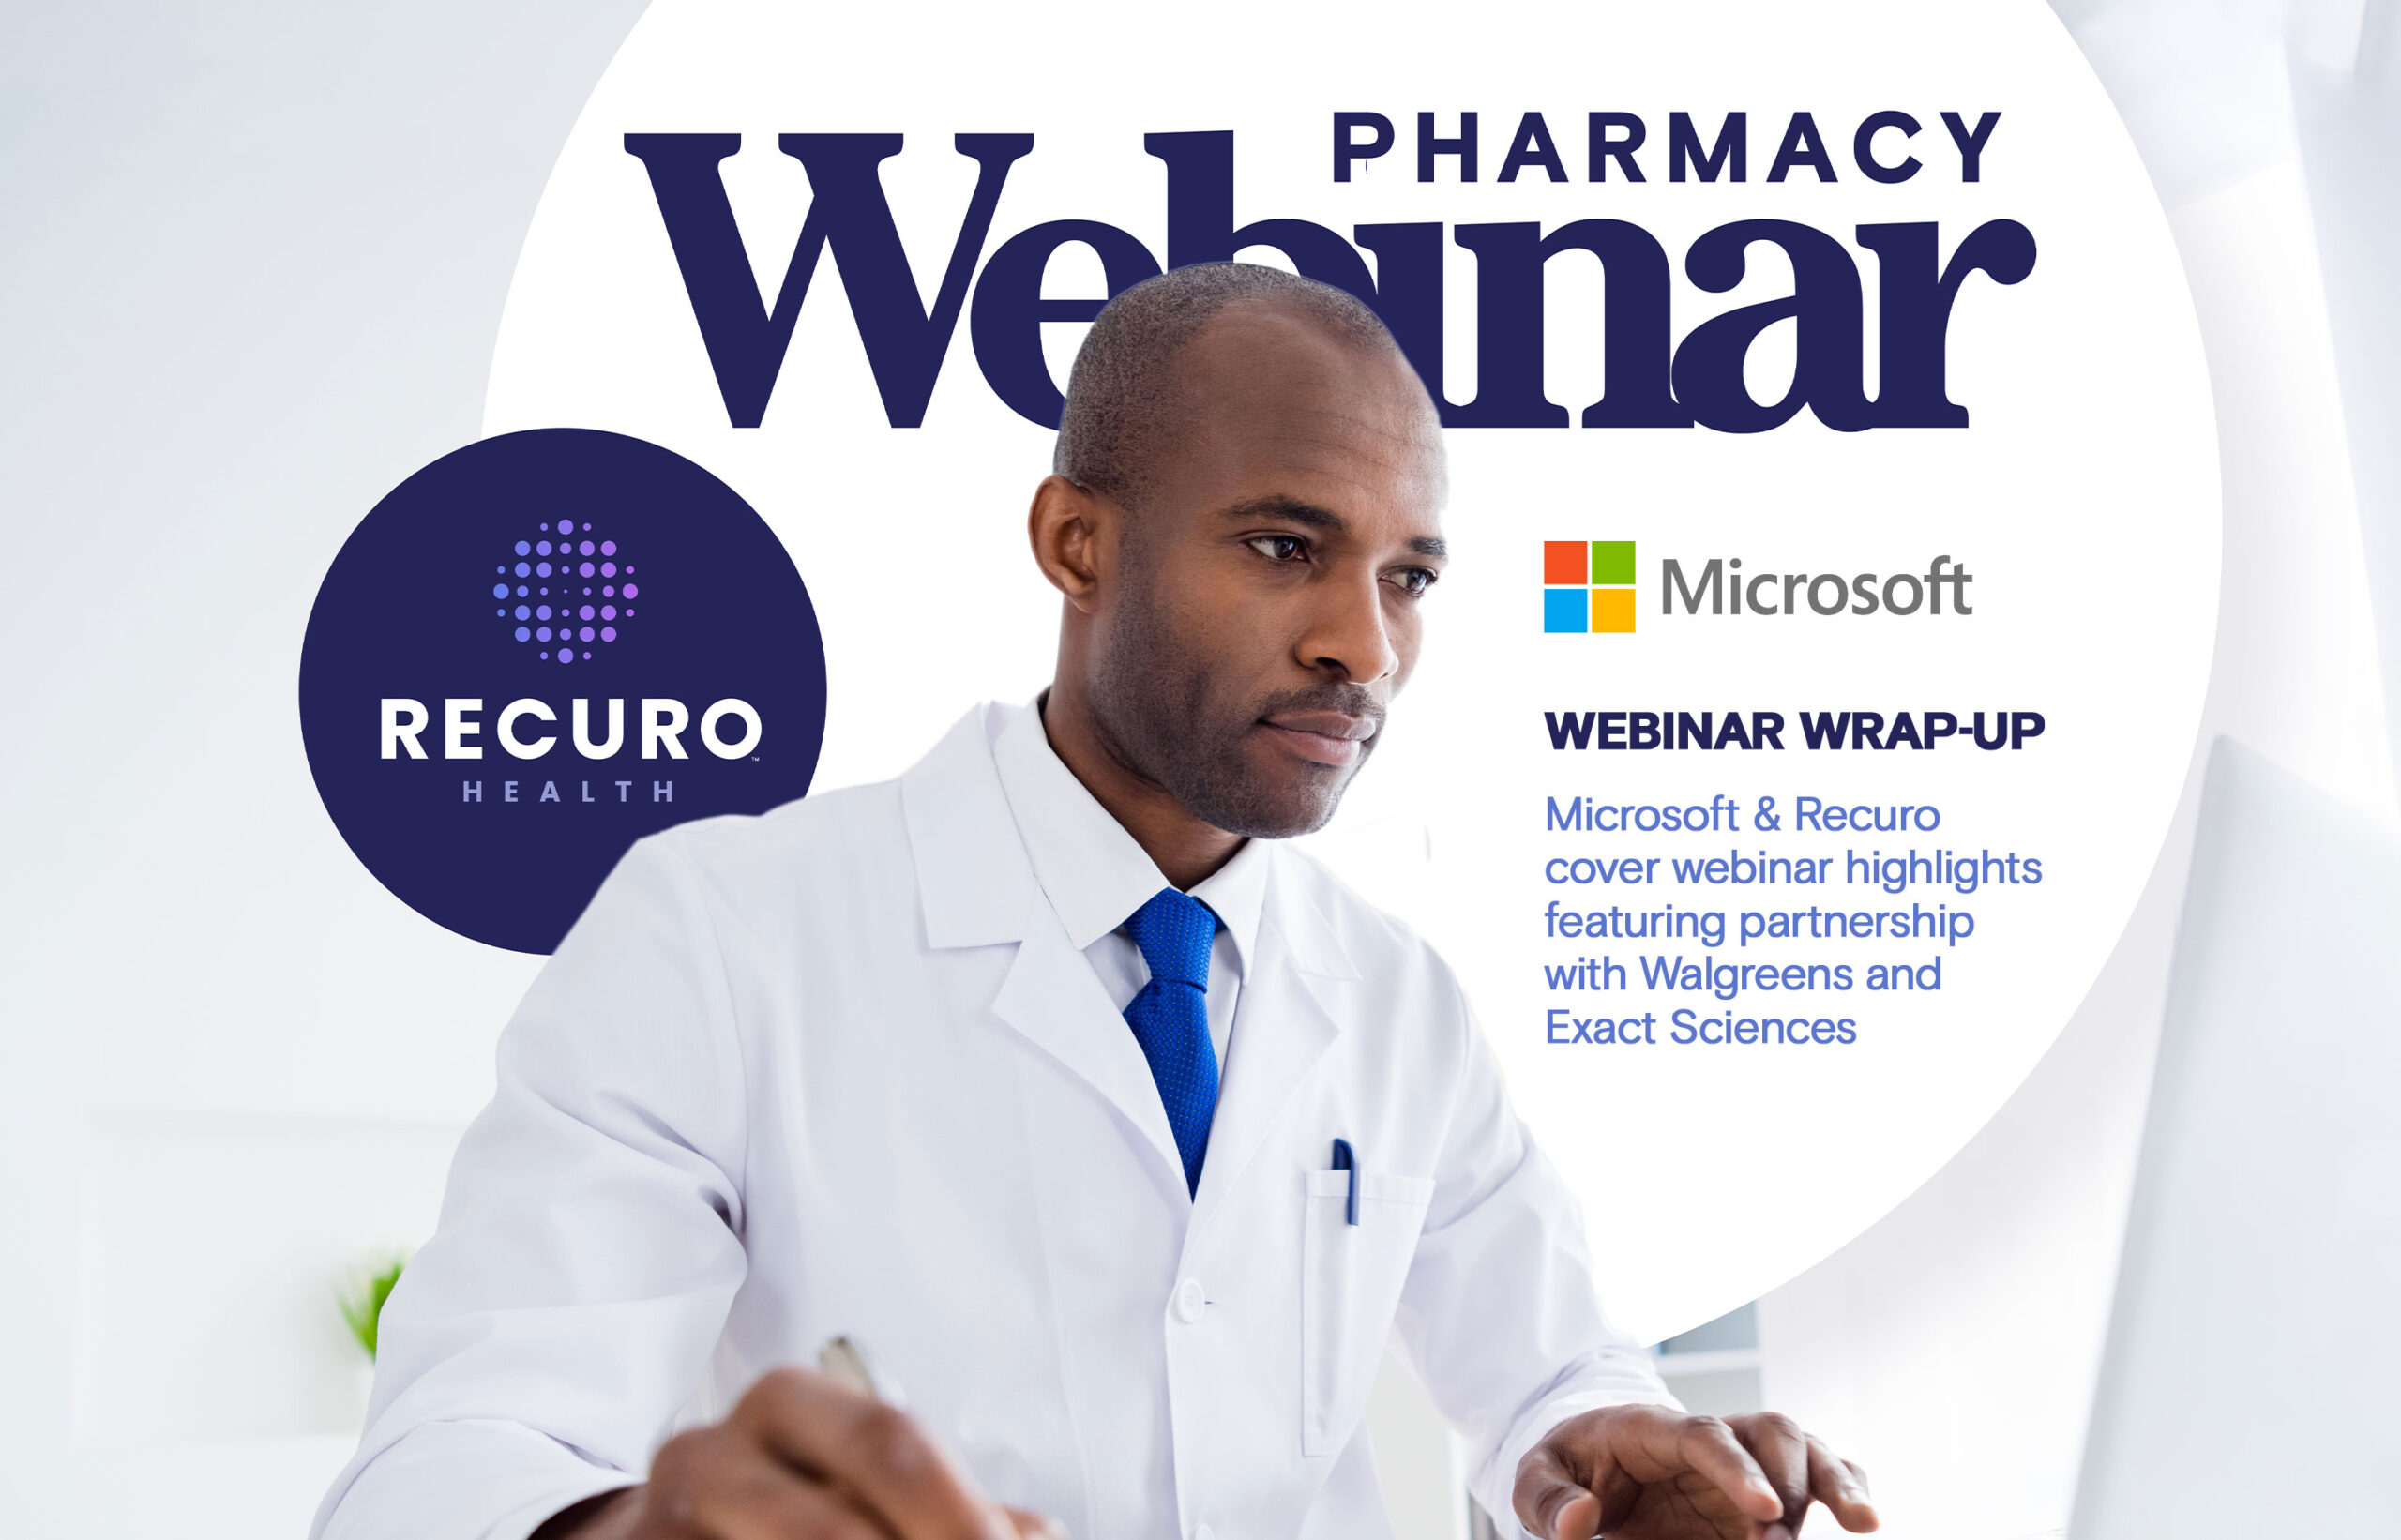 Post-Webinar Follow-Up: How to Transform Your Pharmacy into a Healthcare Destination